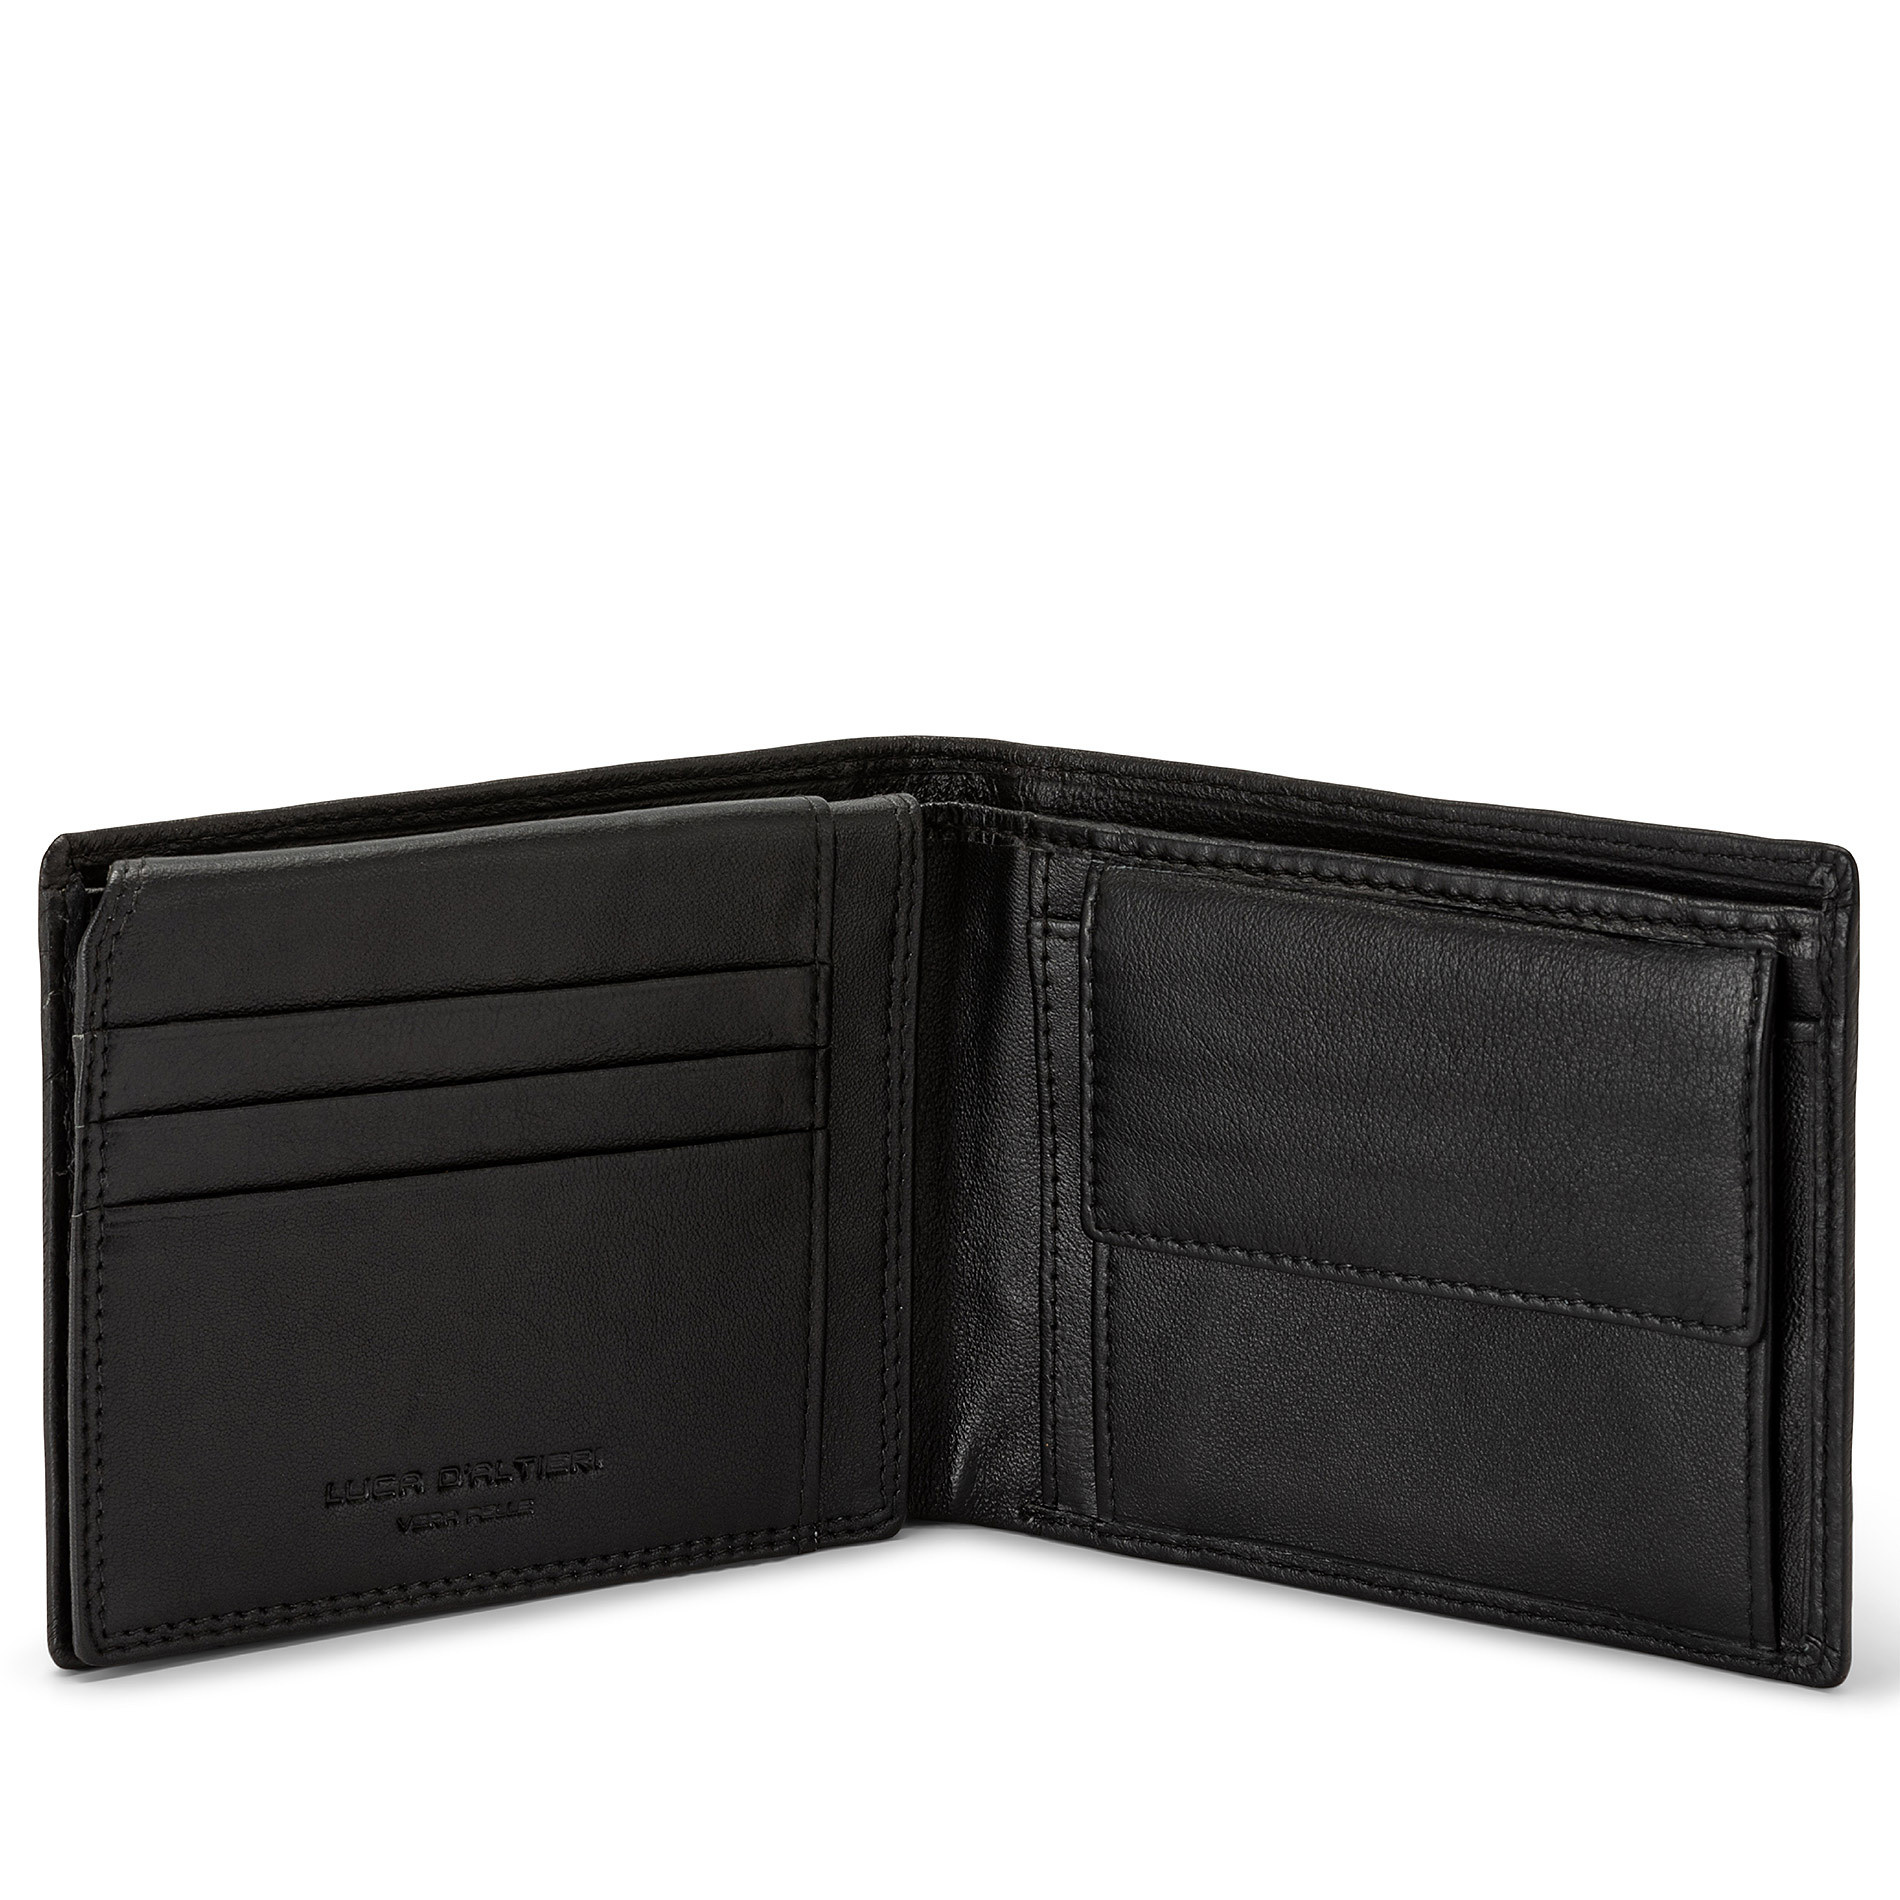 Luca D'Altieri leather wallet, Black, large image number 2